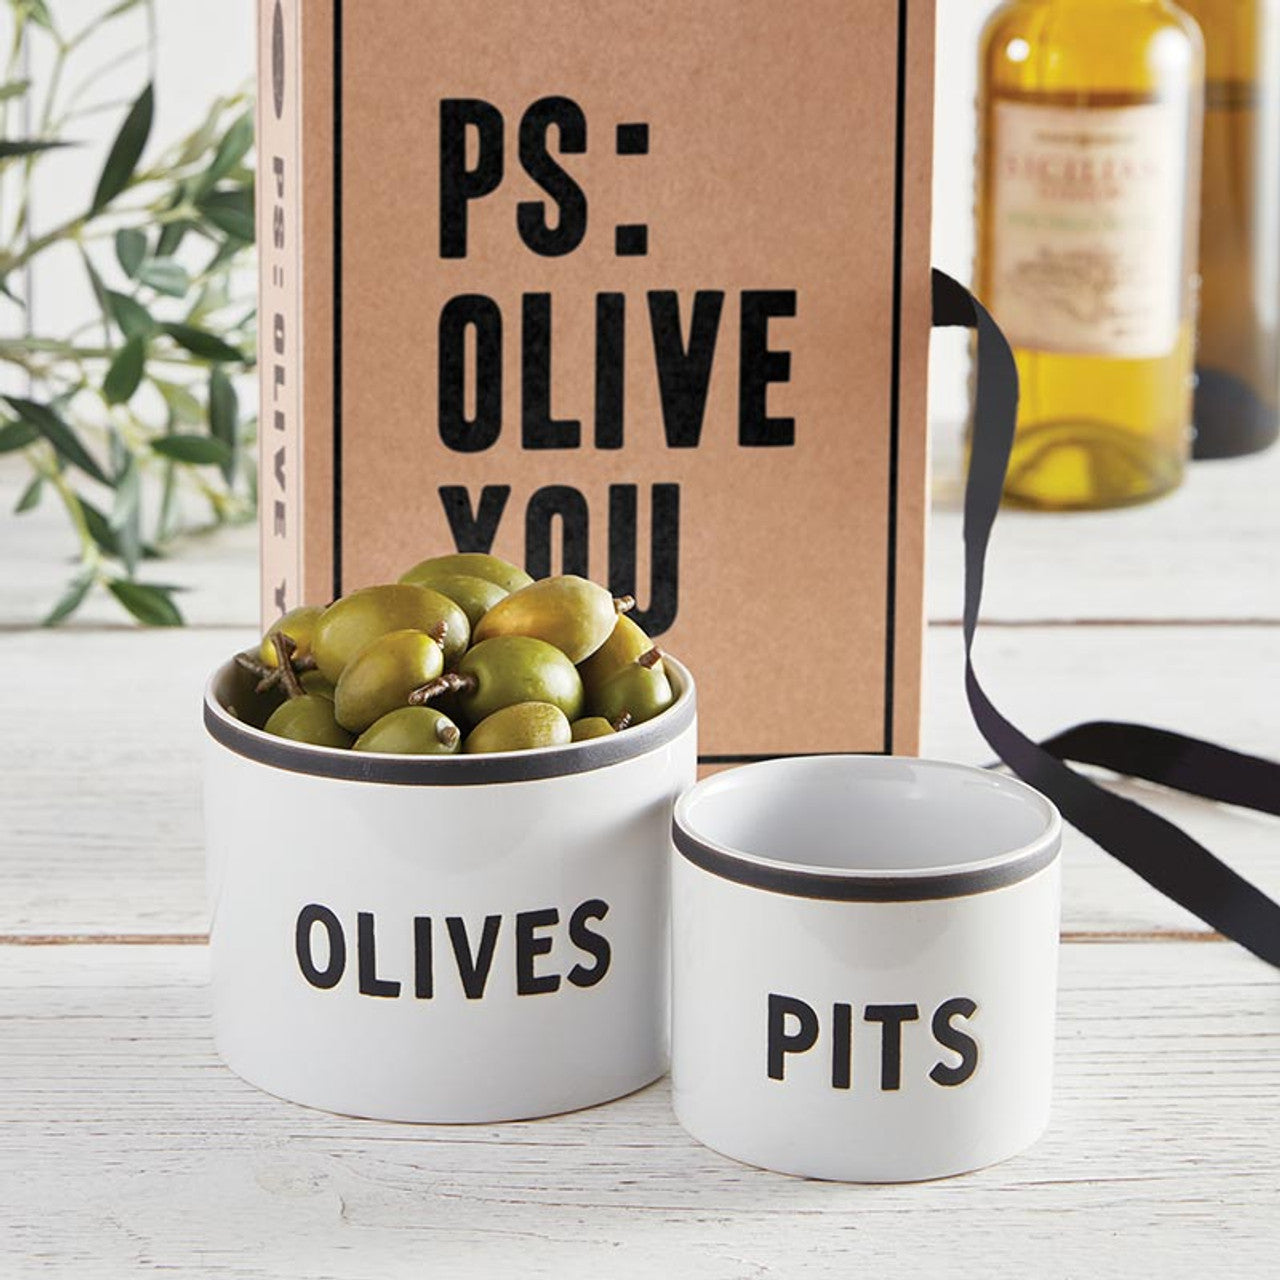 Olive + Pit Bowls Book Box